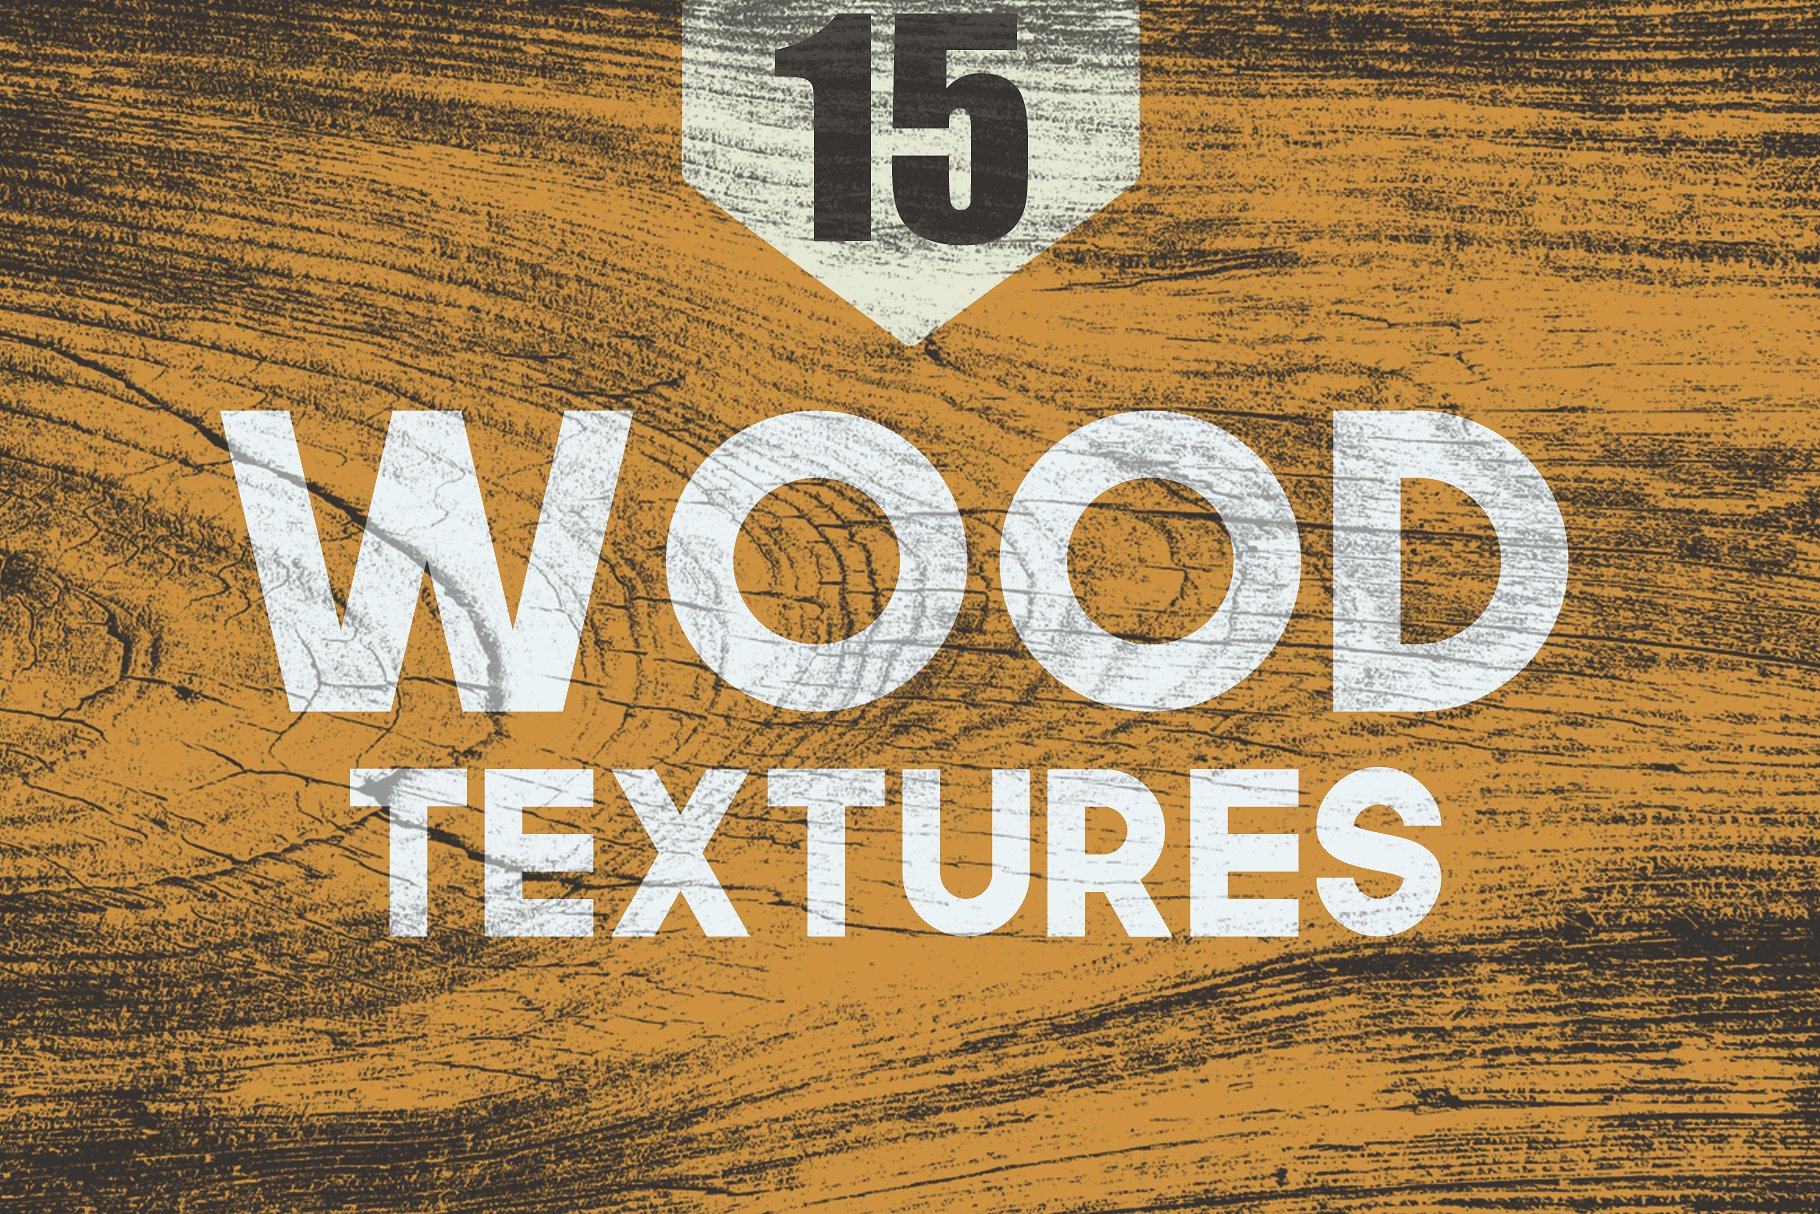 木质纹理设计背景15 Wood Textures